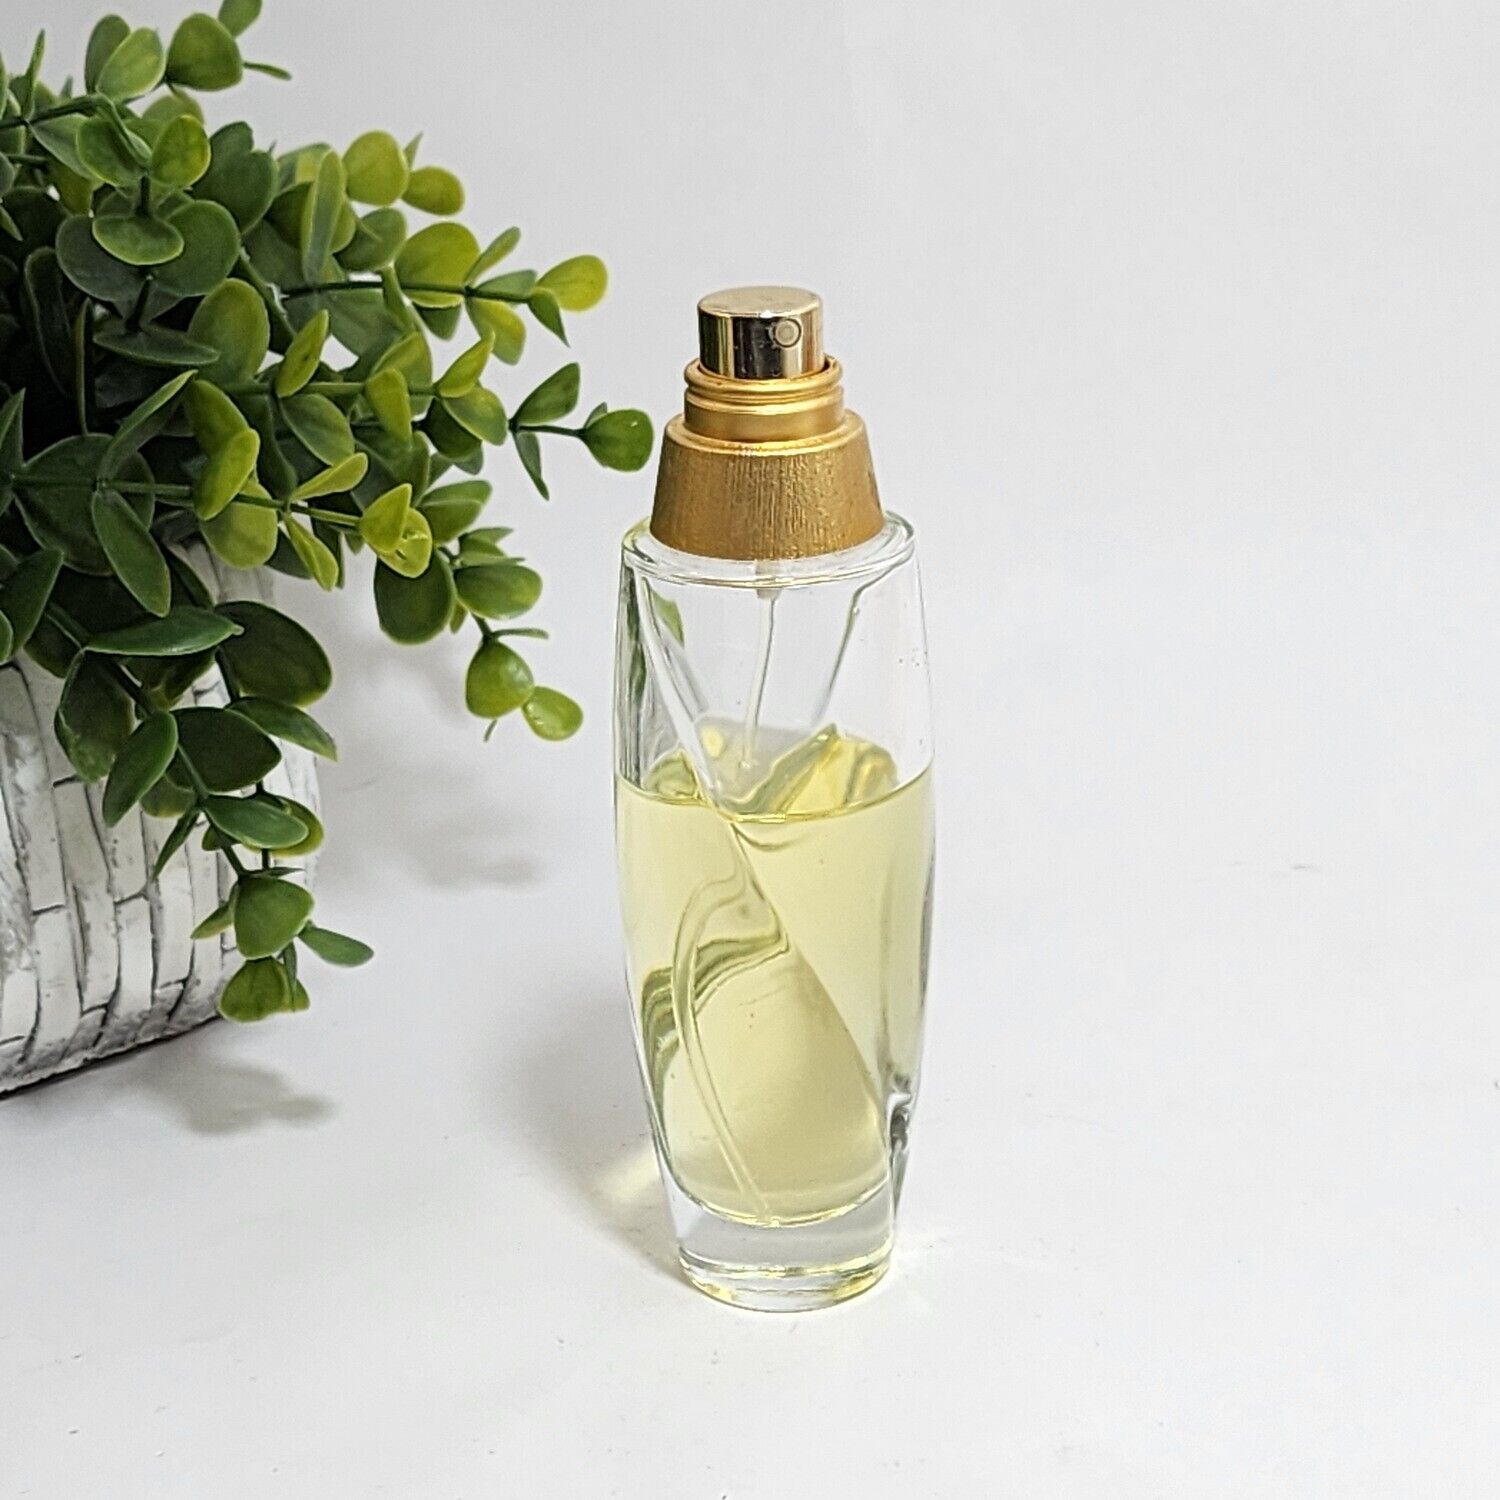 Escada Acte 2 Eau de Parfum Spray Perfume for Women1.7 fl oz /50 ml ~ 60% full